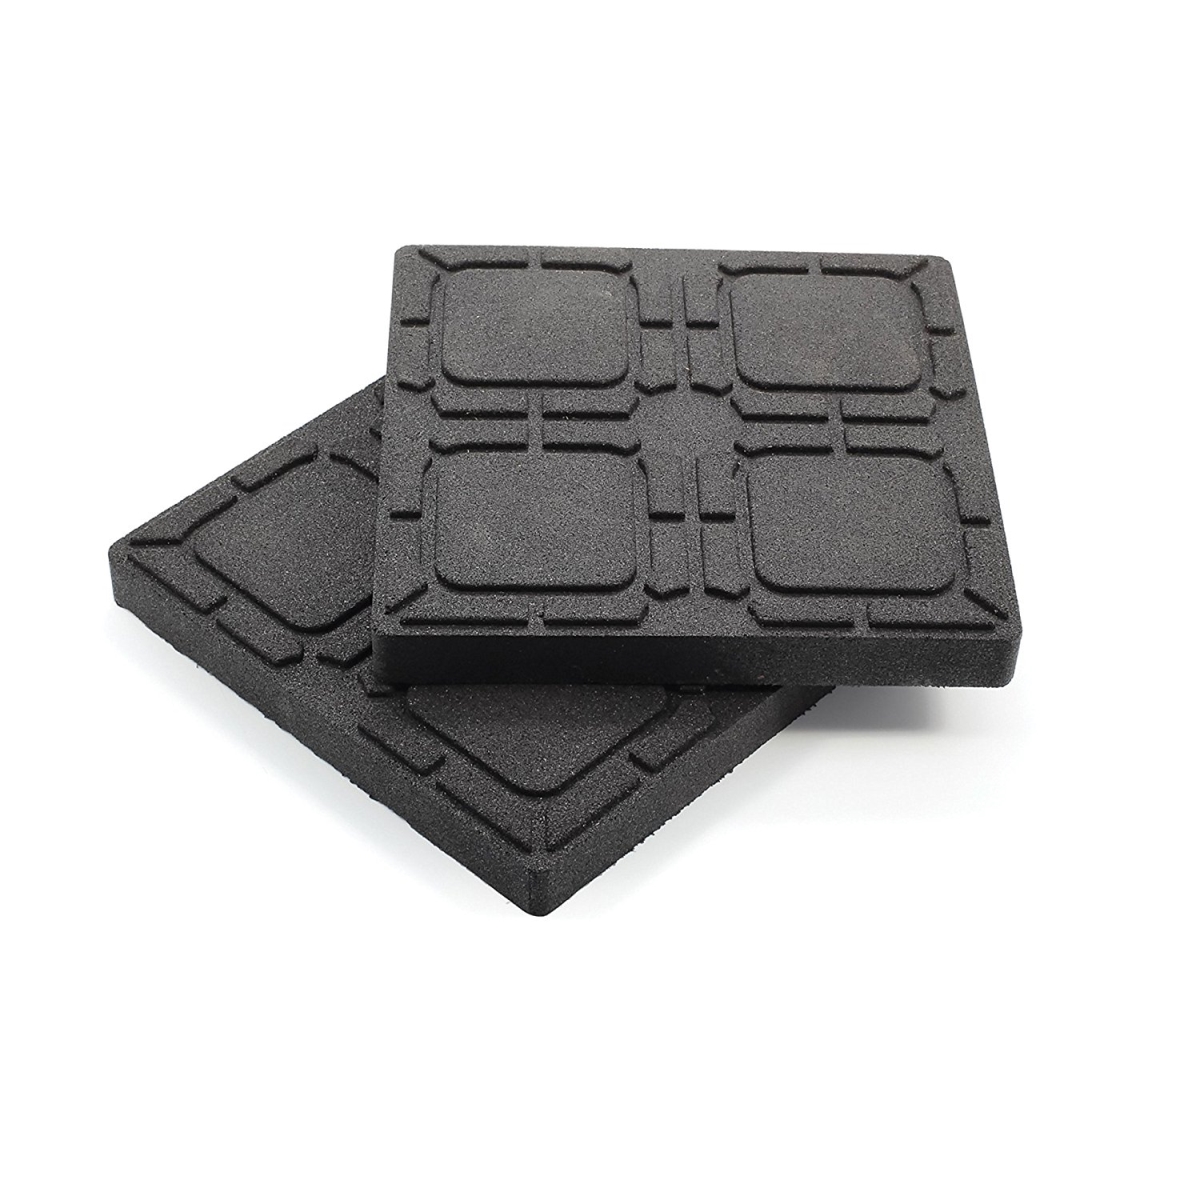 C1w-44600 Universal Flex Non-slip Pads For Leveling Blocks